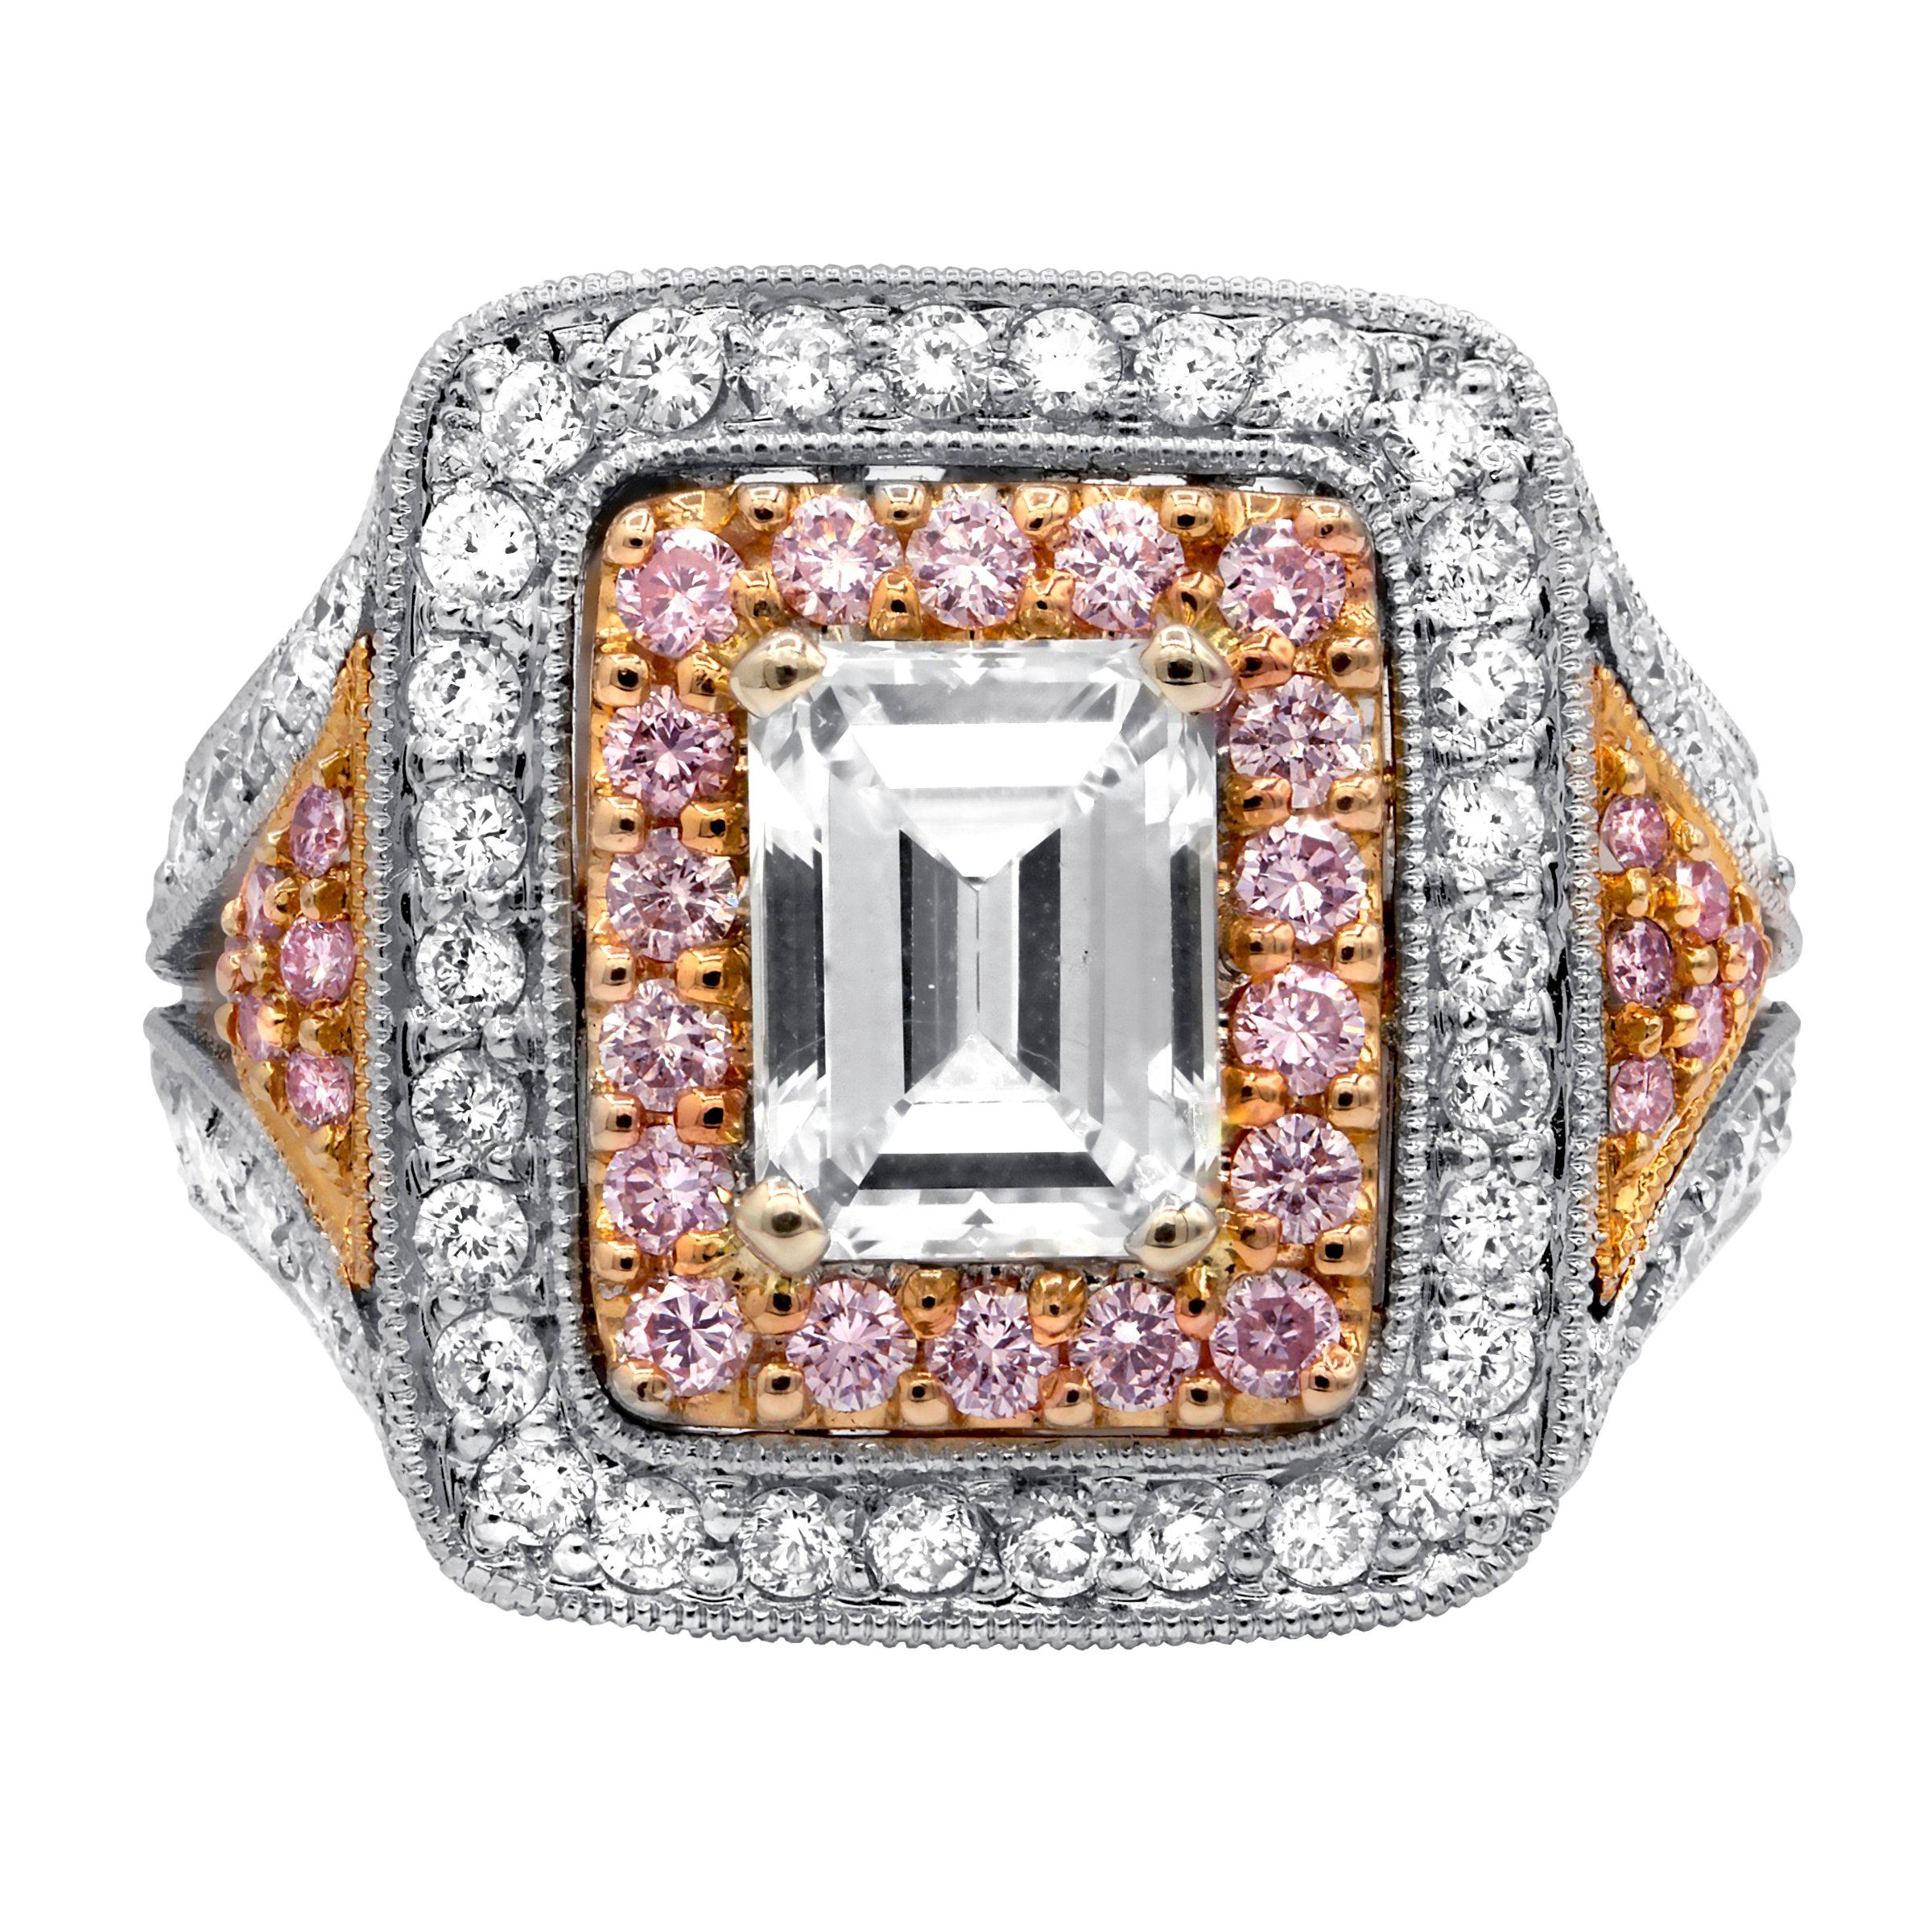 Certified 1.50 Carat H Color VS in clarity Diamond Ring